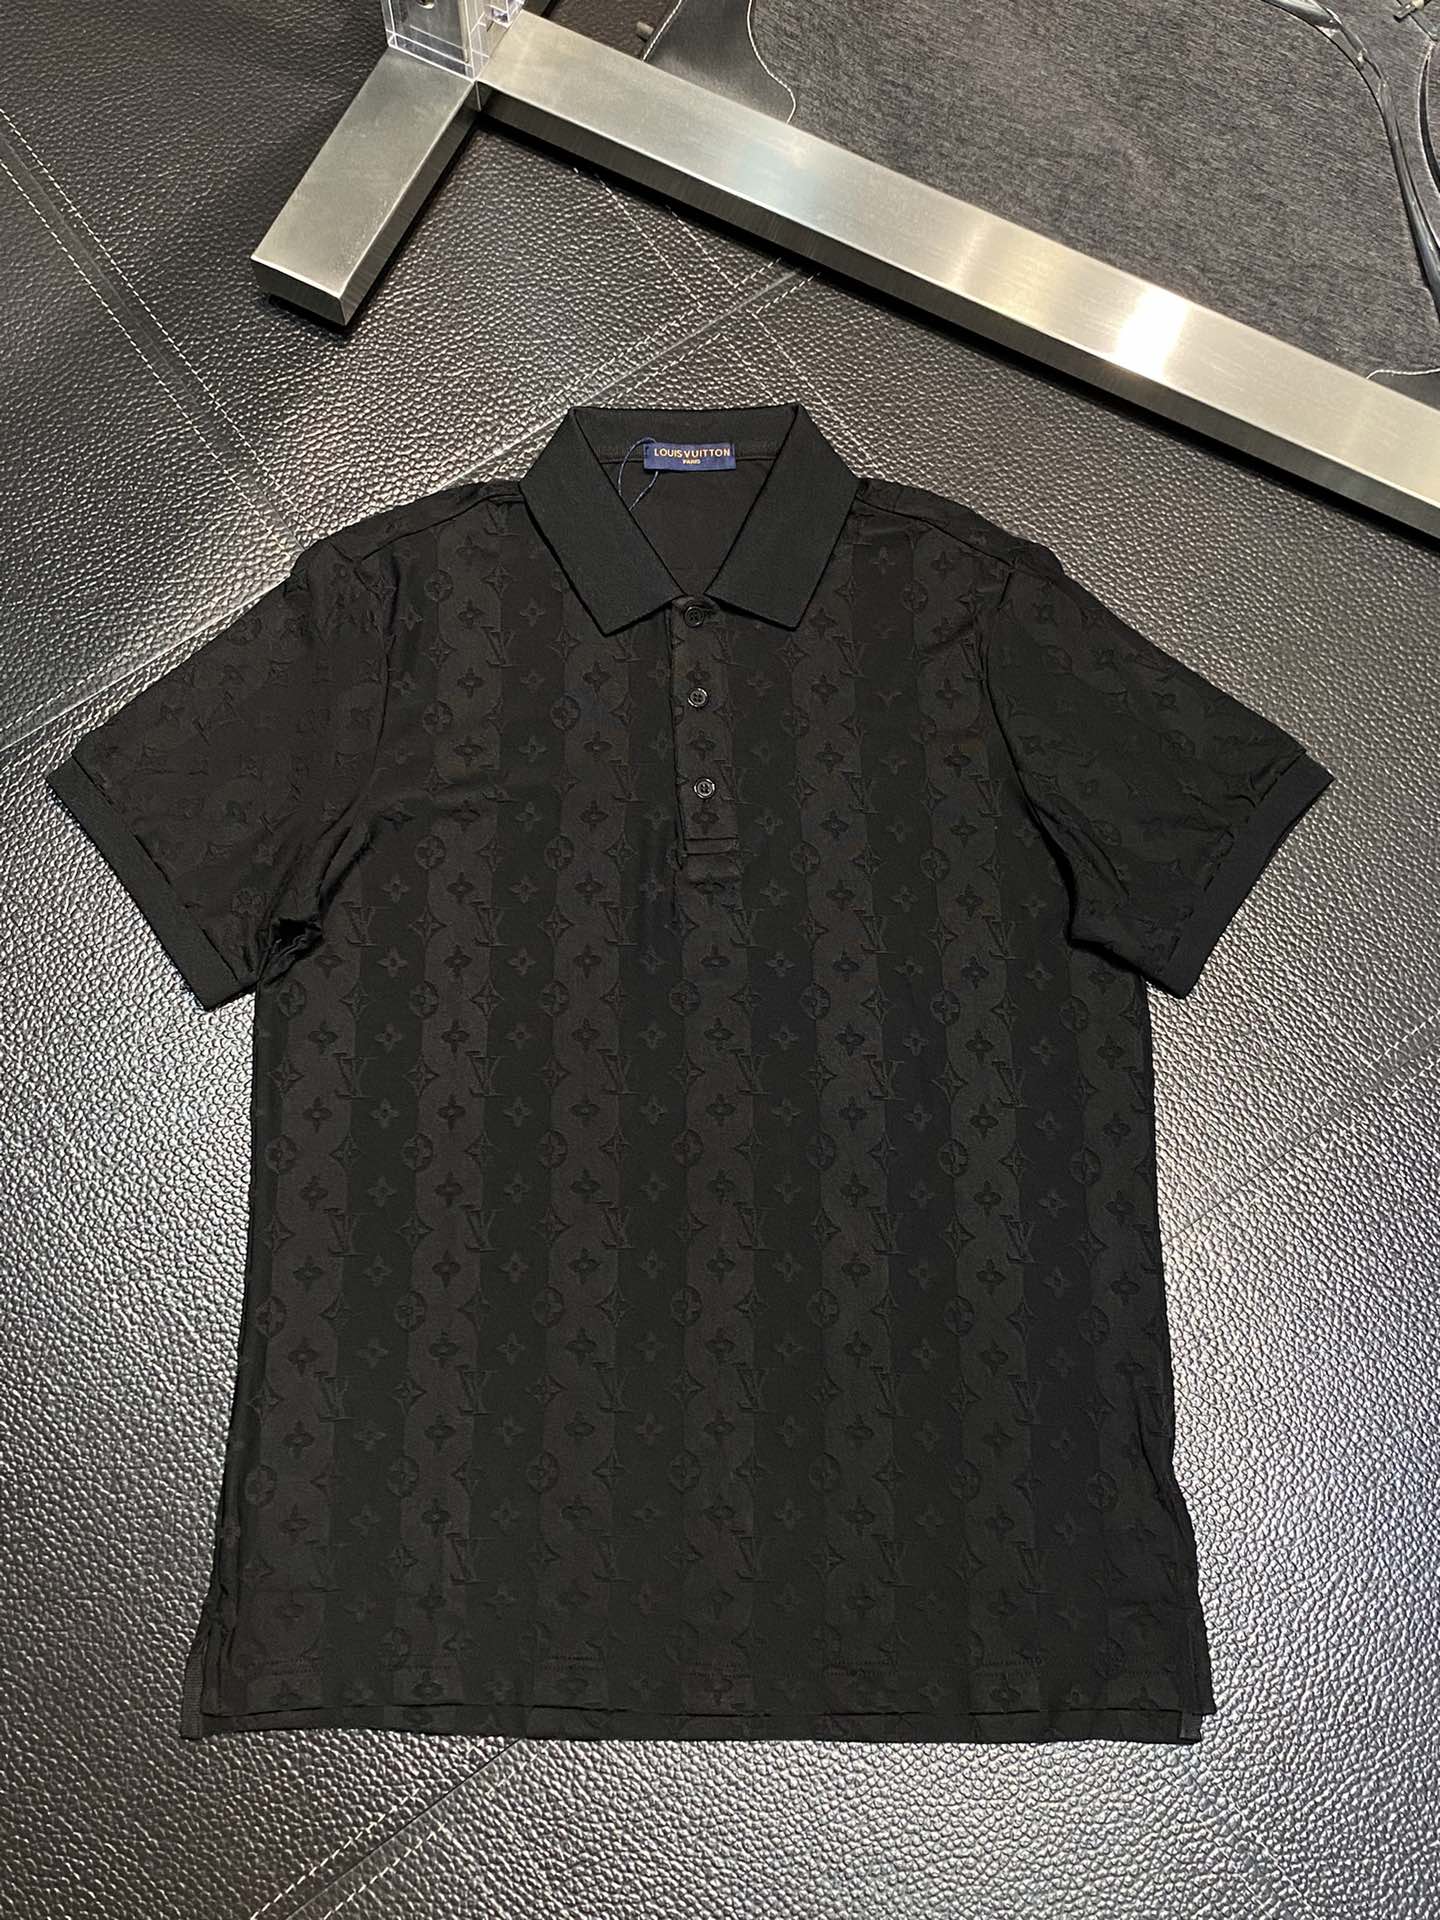 Louis Vuitton Clothing Polo T-Shirt Men Fashion Short Sleeve